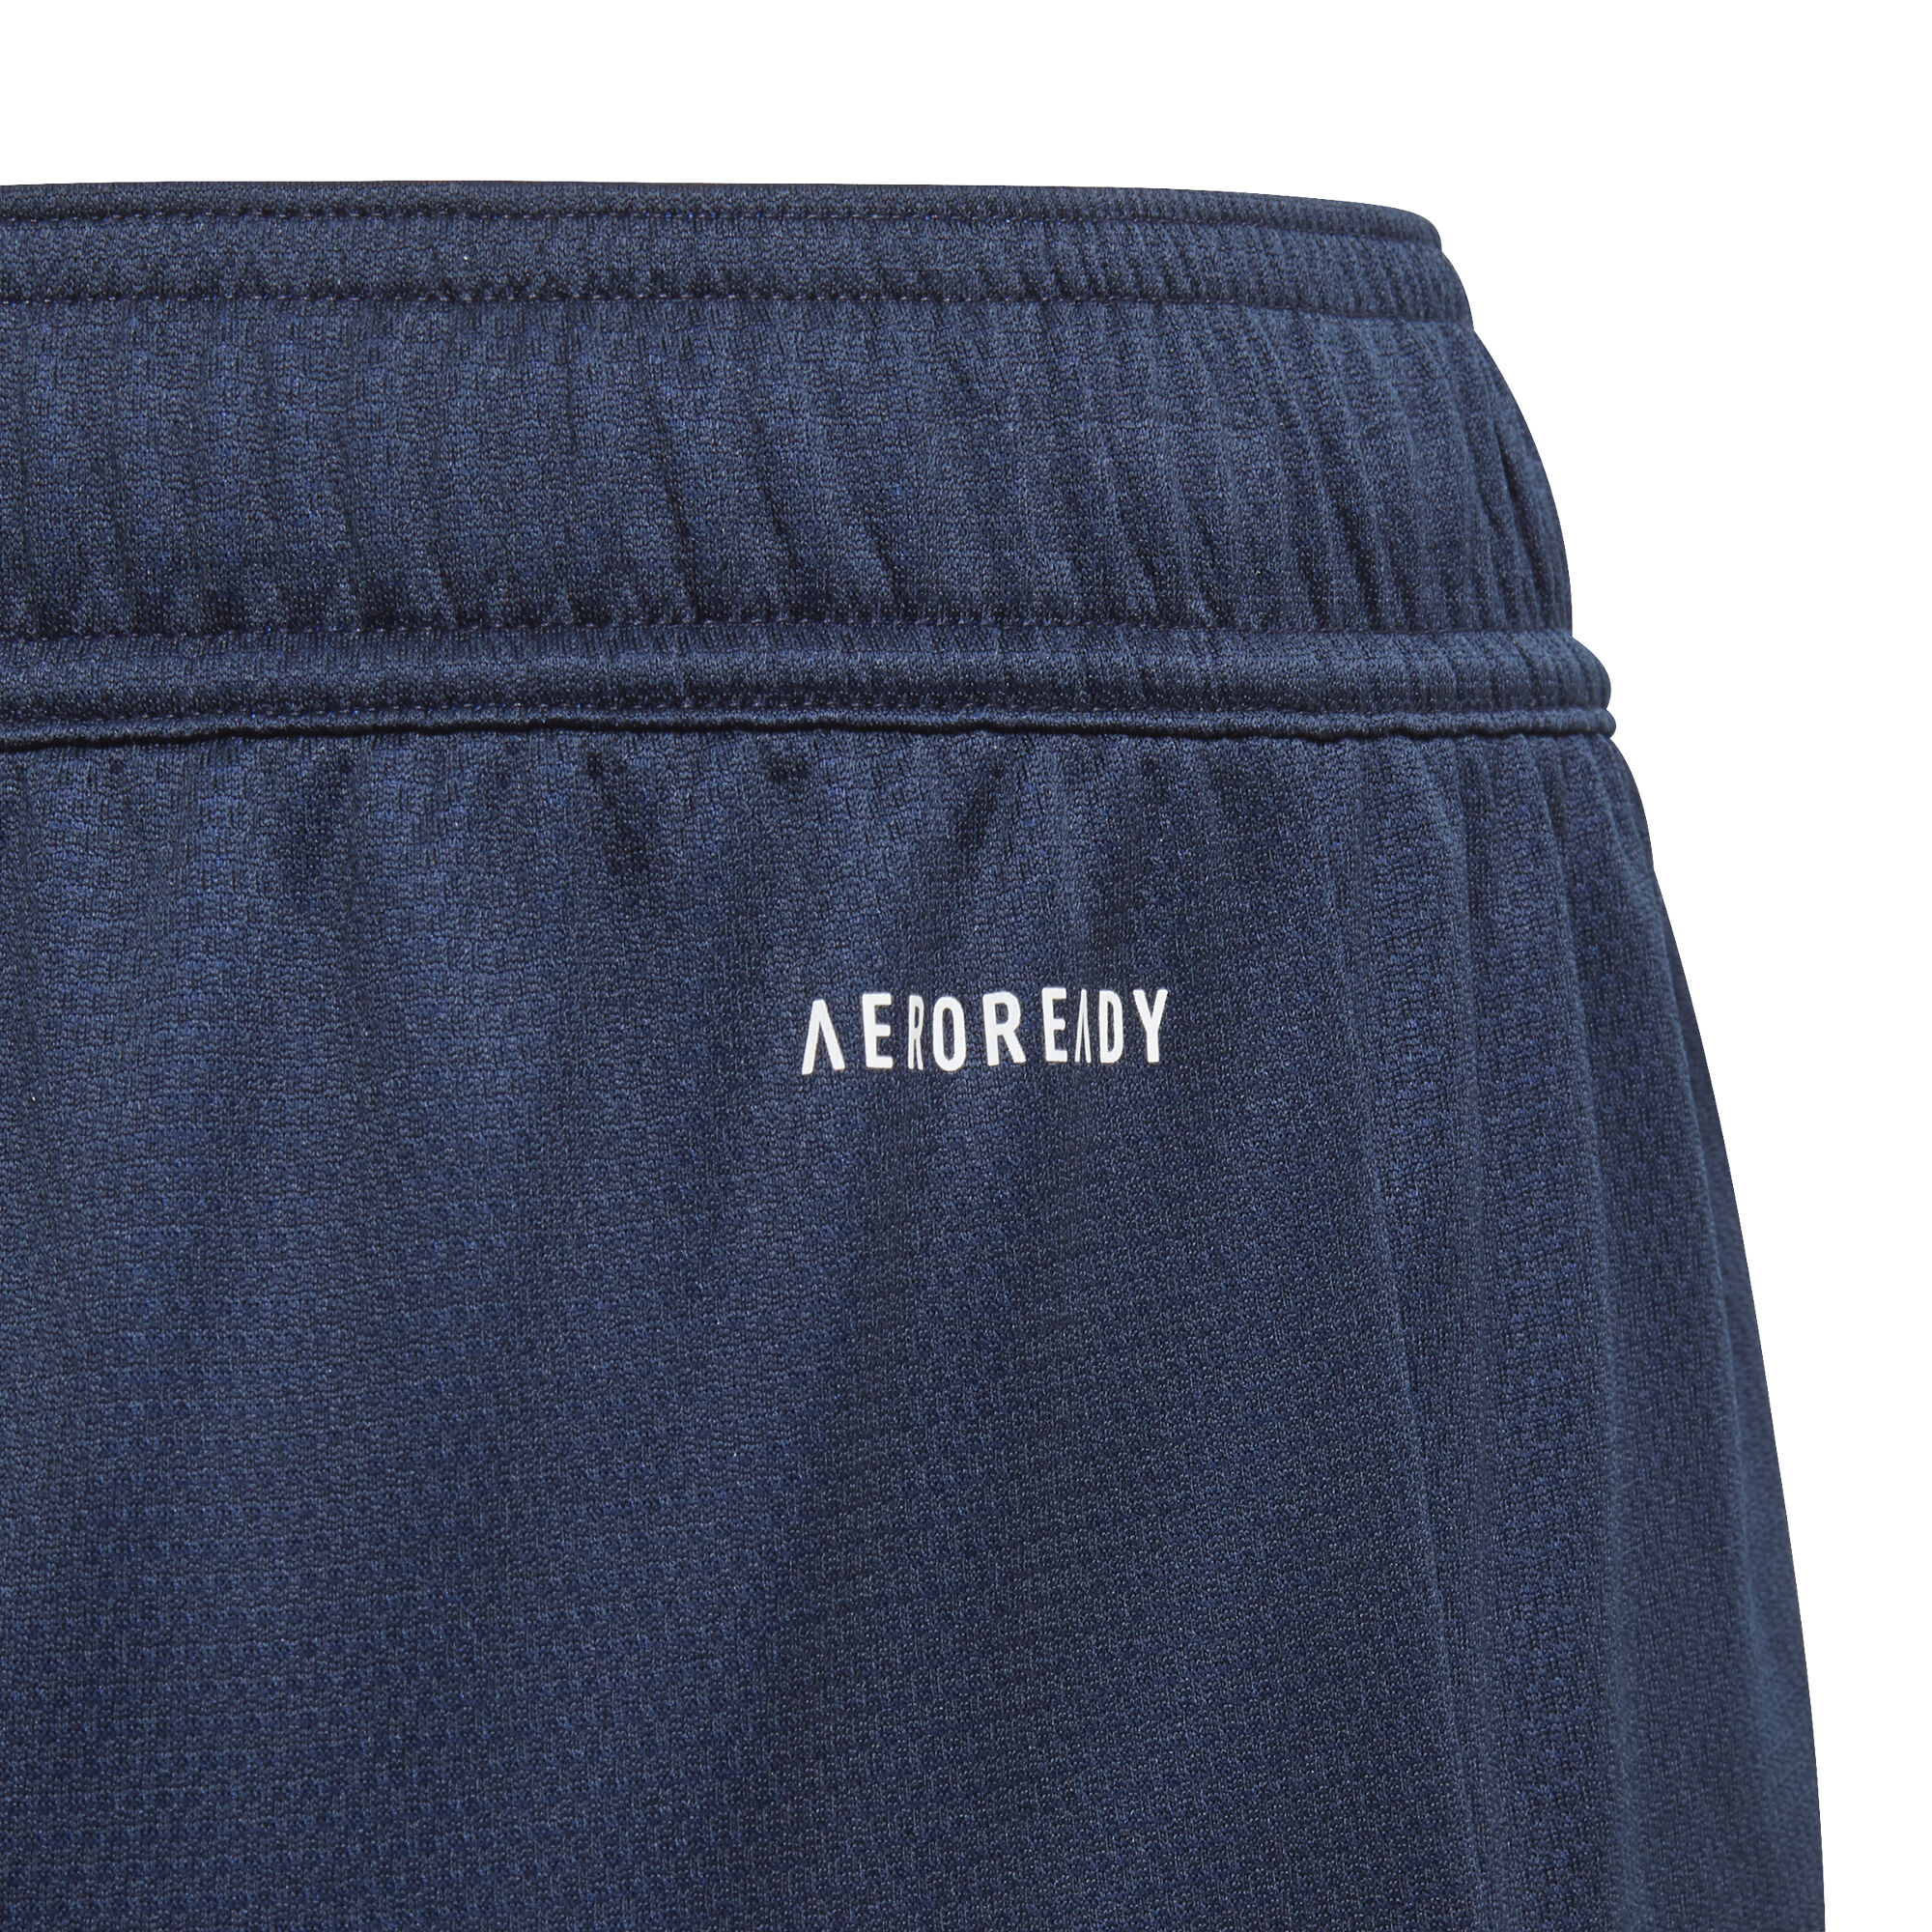 Buy adidas AeroReady Shorts Boys Dark Blue, Light Blue online | Tennis ...